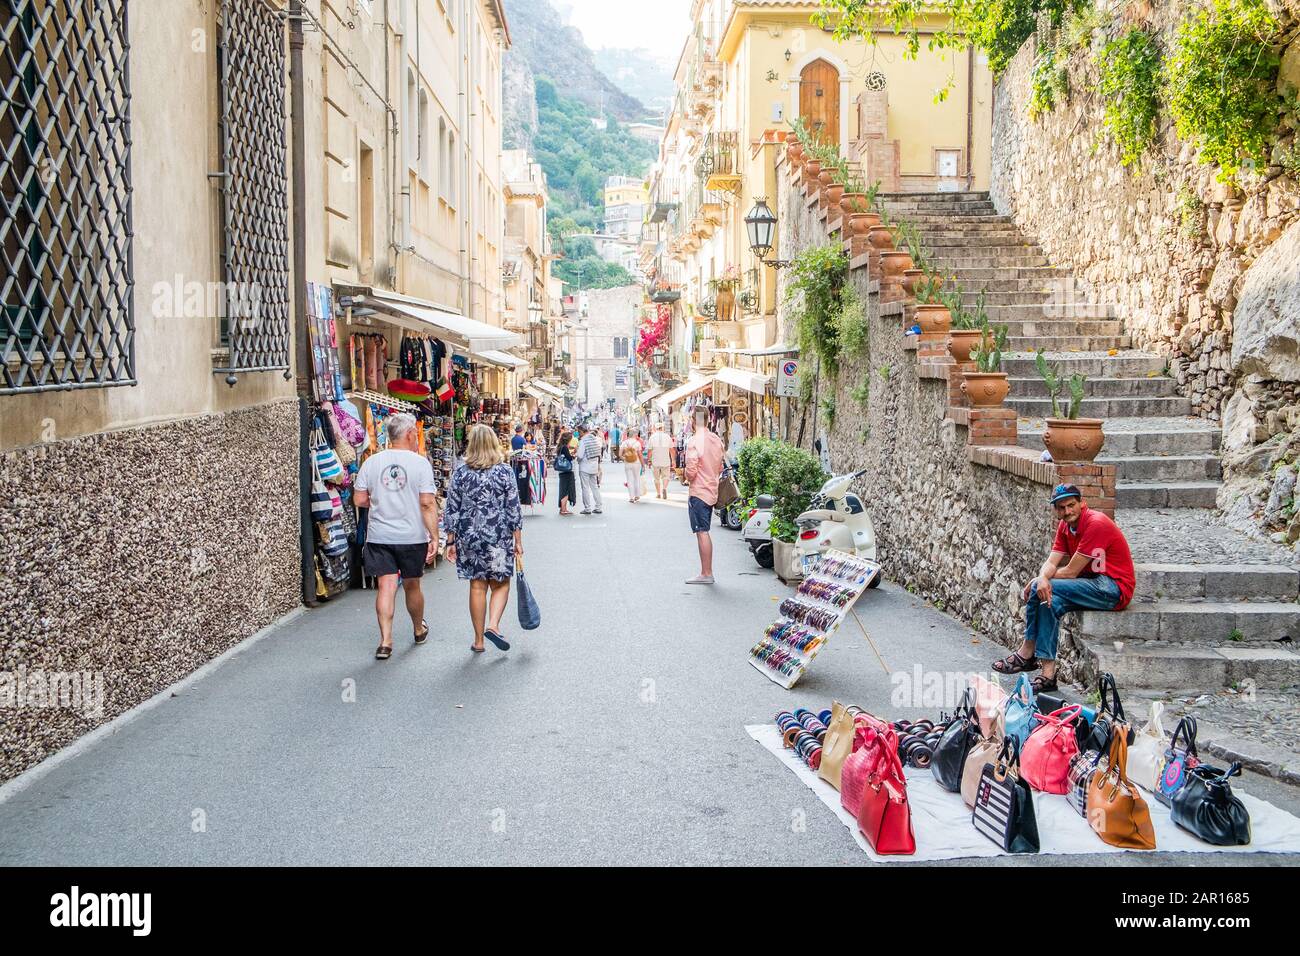 Urban scene from Taormina, Sicily. Historic Taormina is a major tourist destination on Sicily. Stock Photo